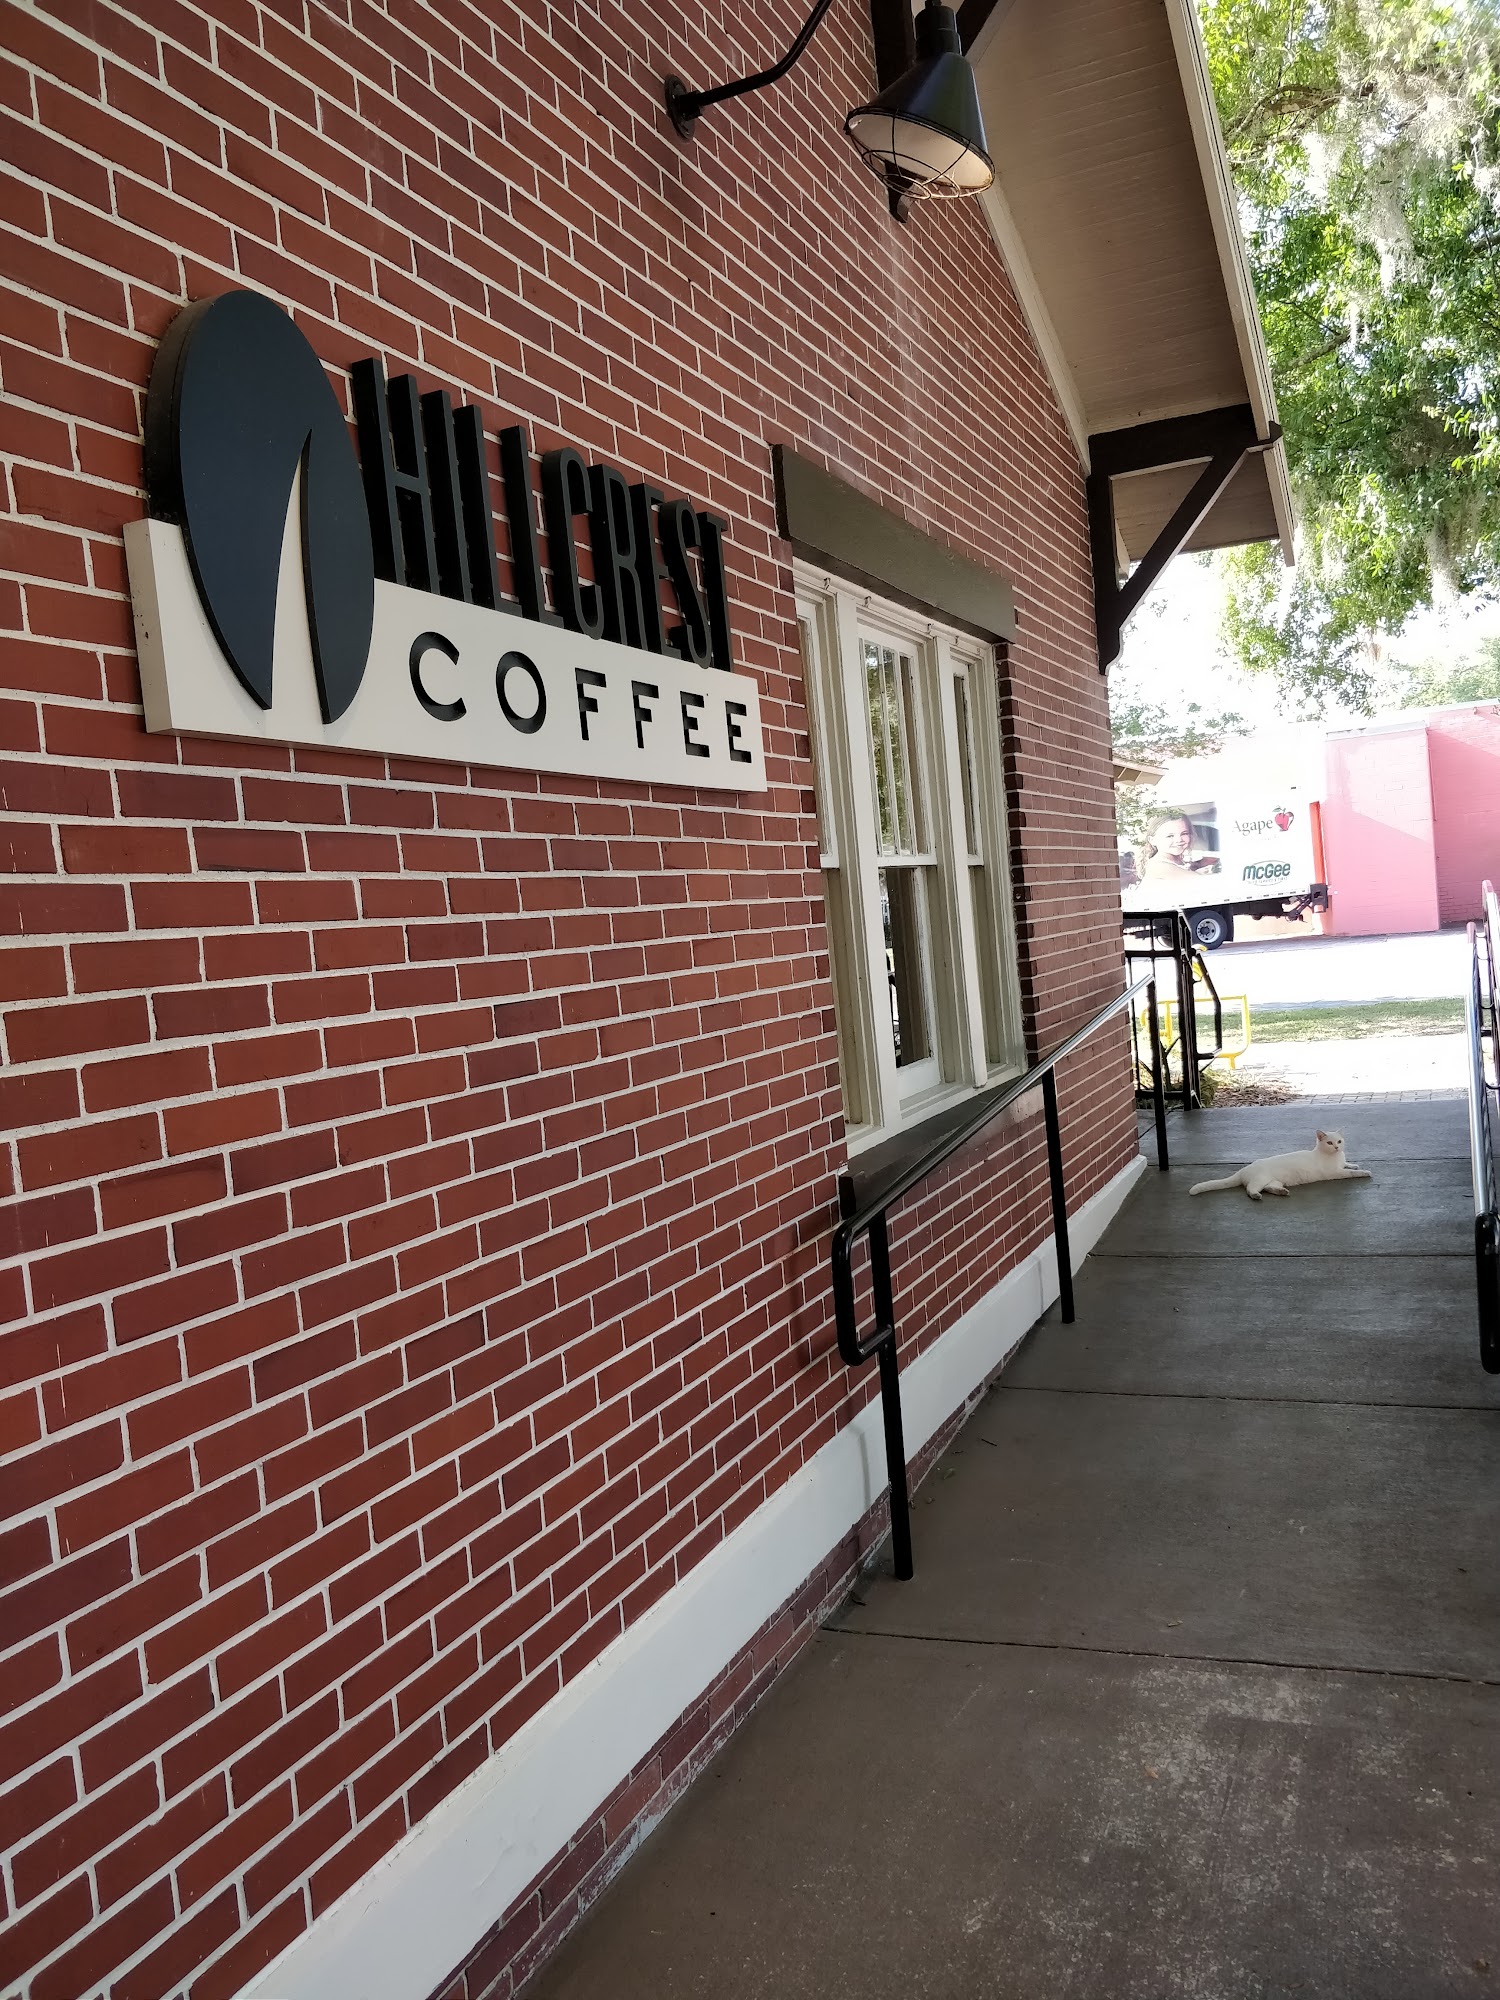 Hillcrest Coffee